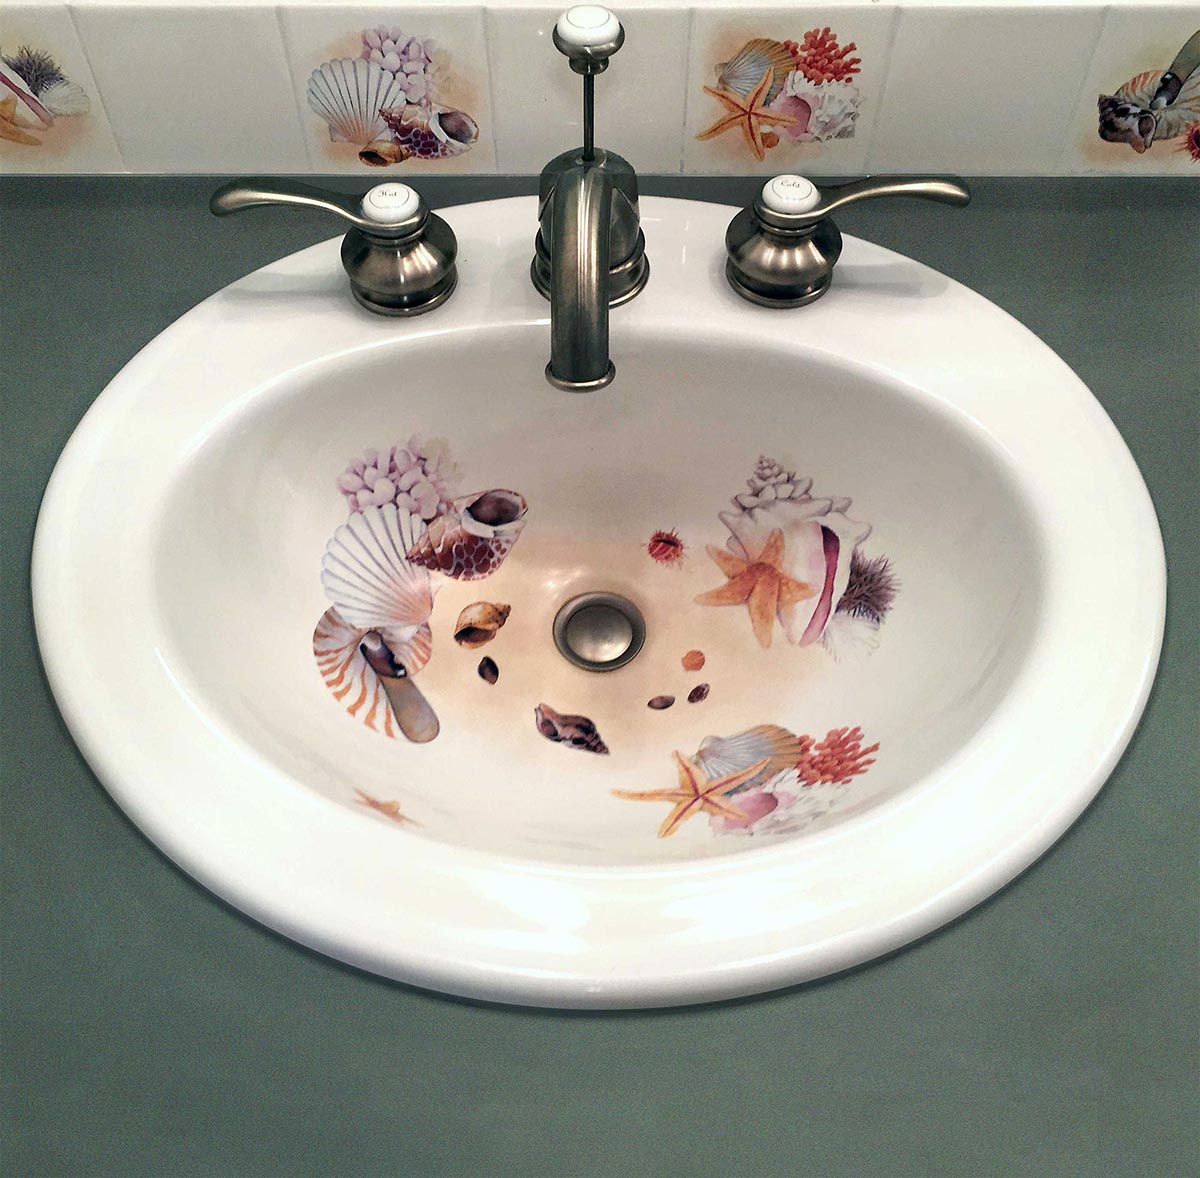 custom seashells hand painted sink and backsplash tiles for seaside beach bathroom 